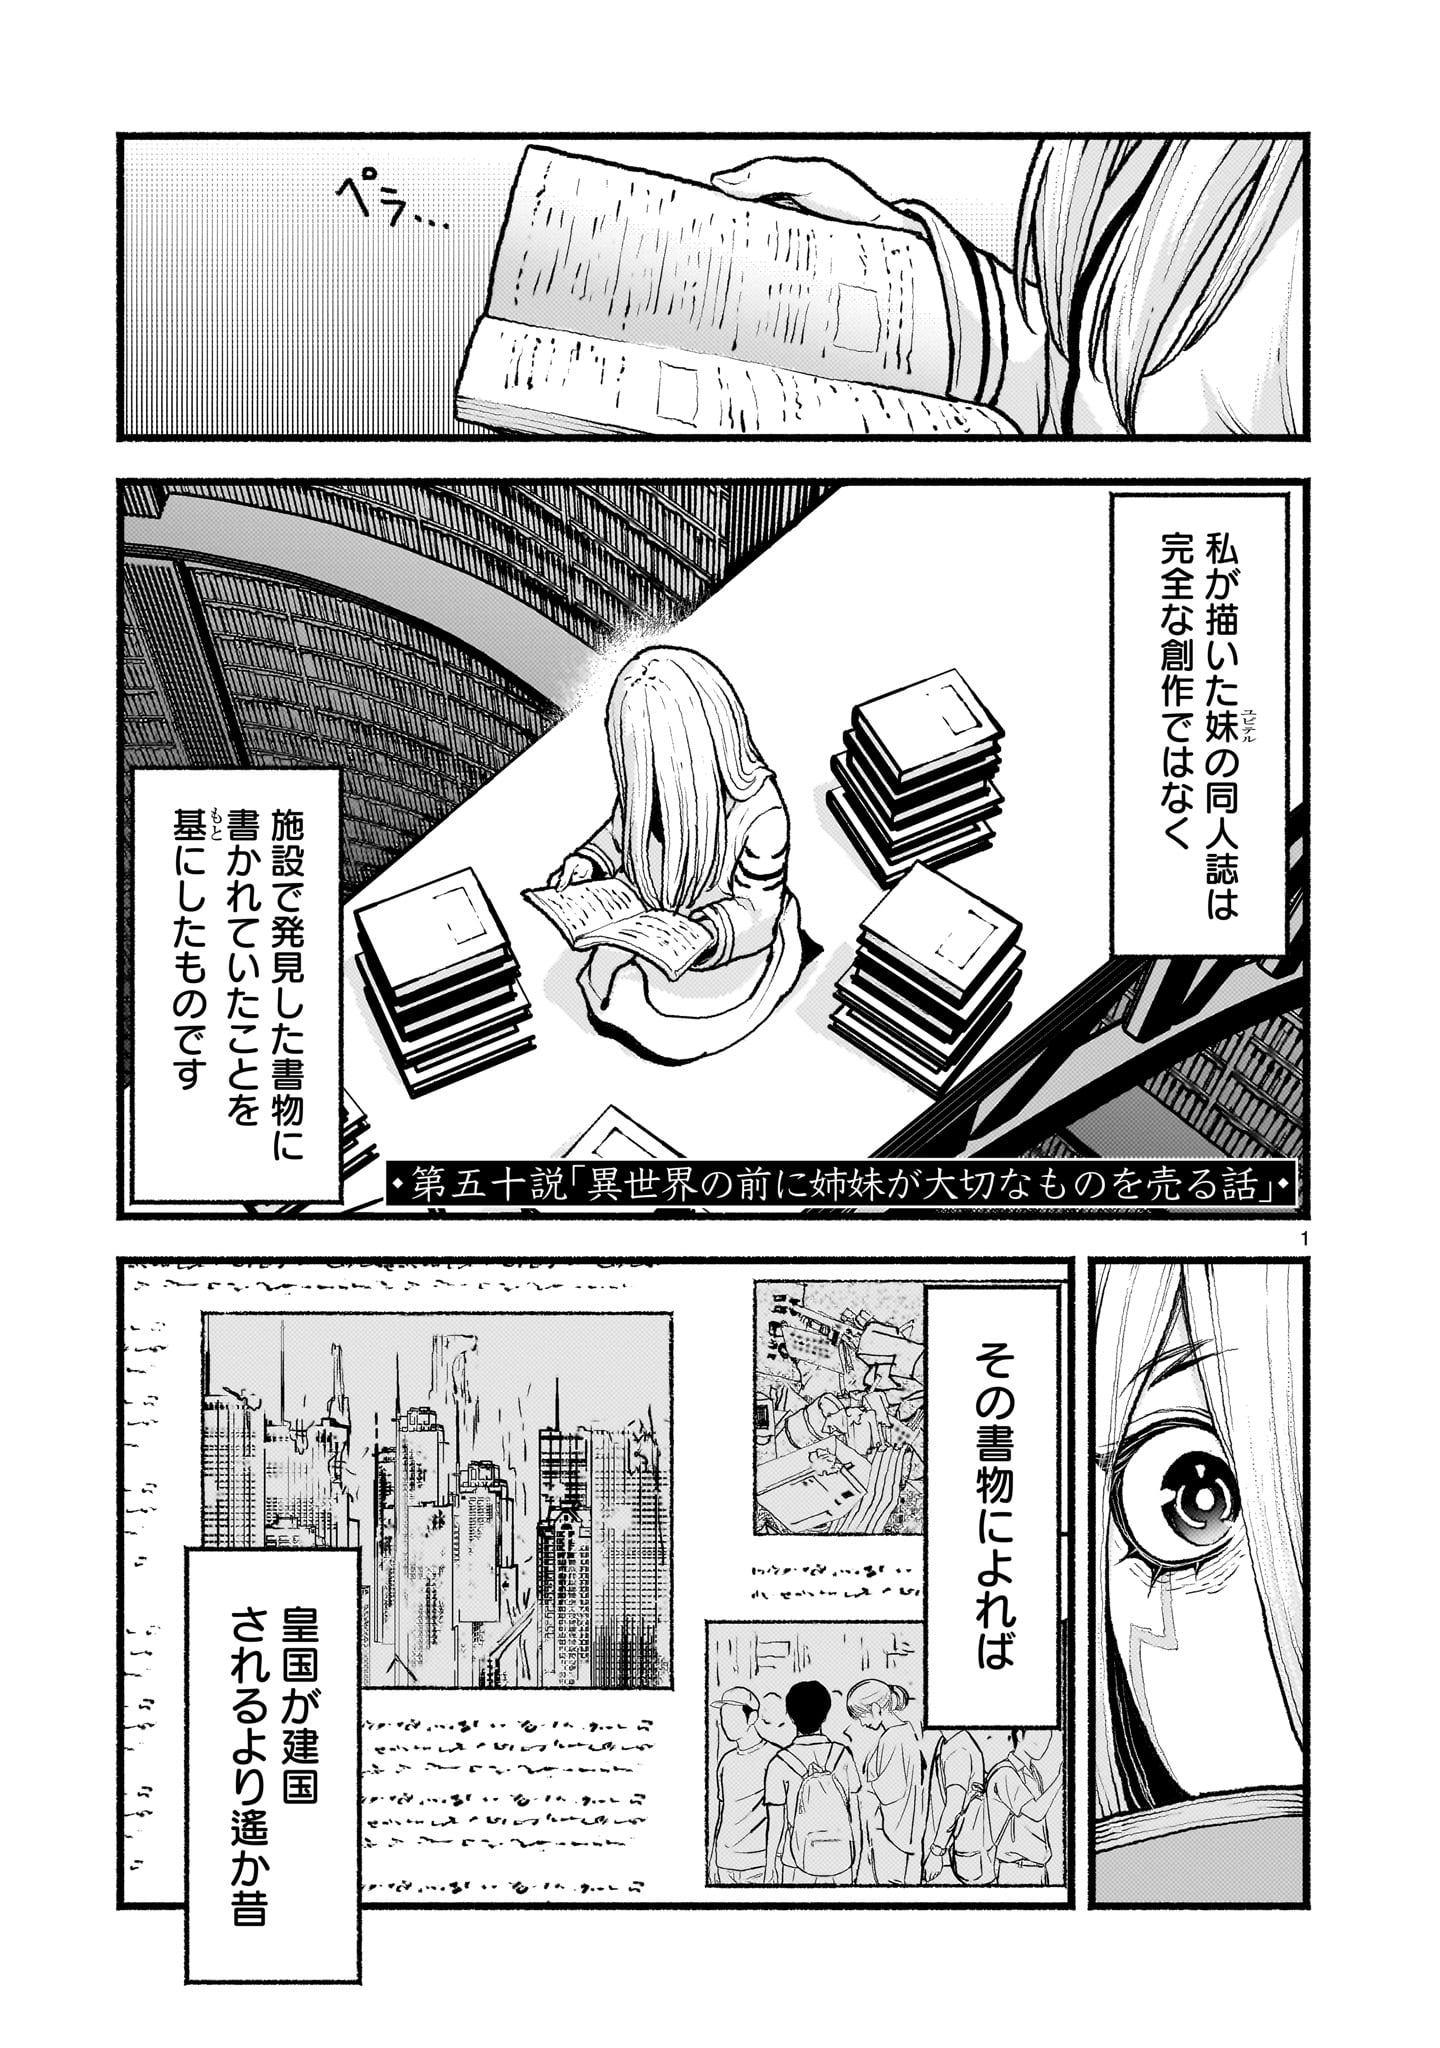 Kaminaki Sekai no Kamisama Katsudou - Chapter 50 - Page 1